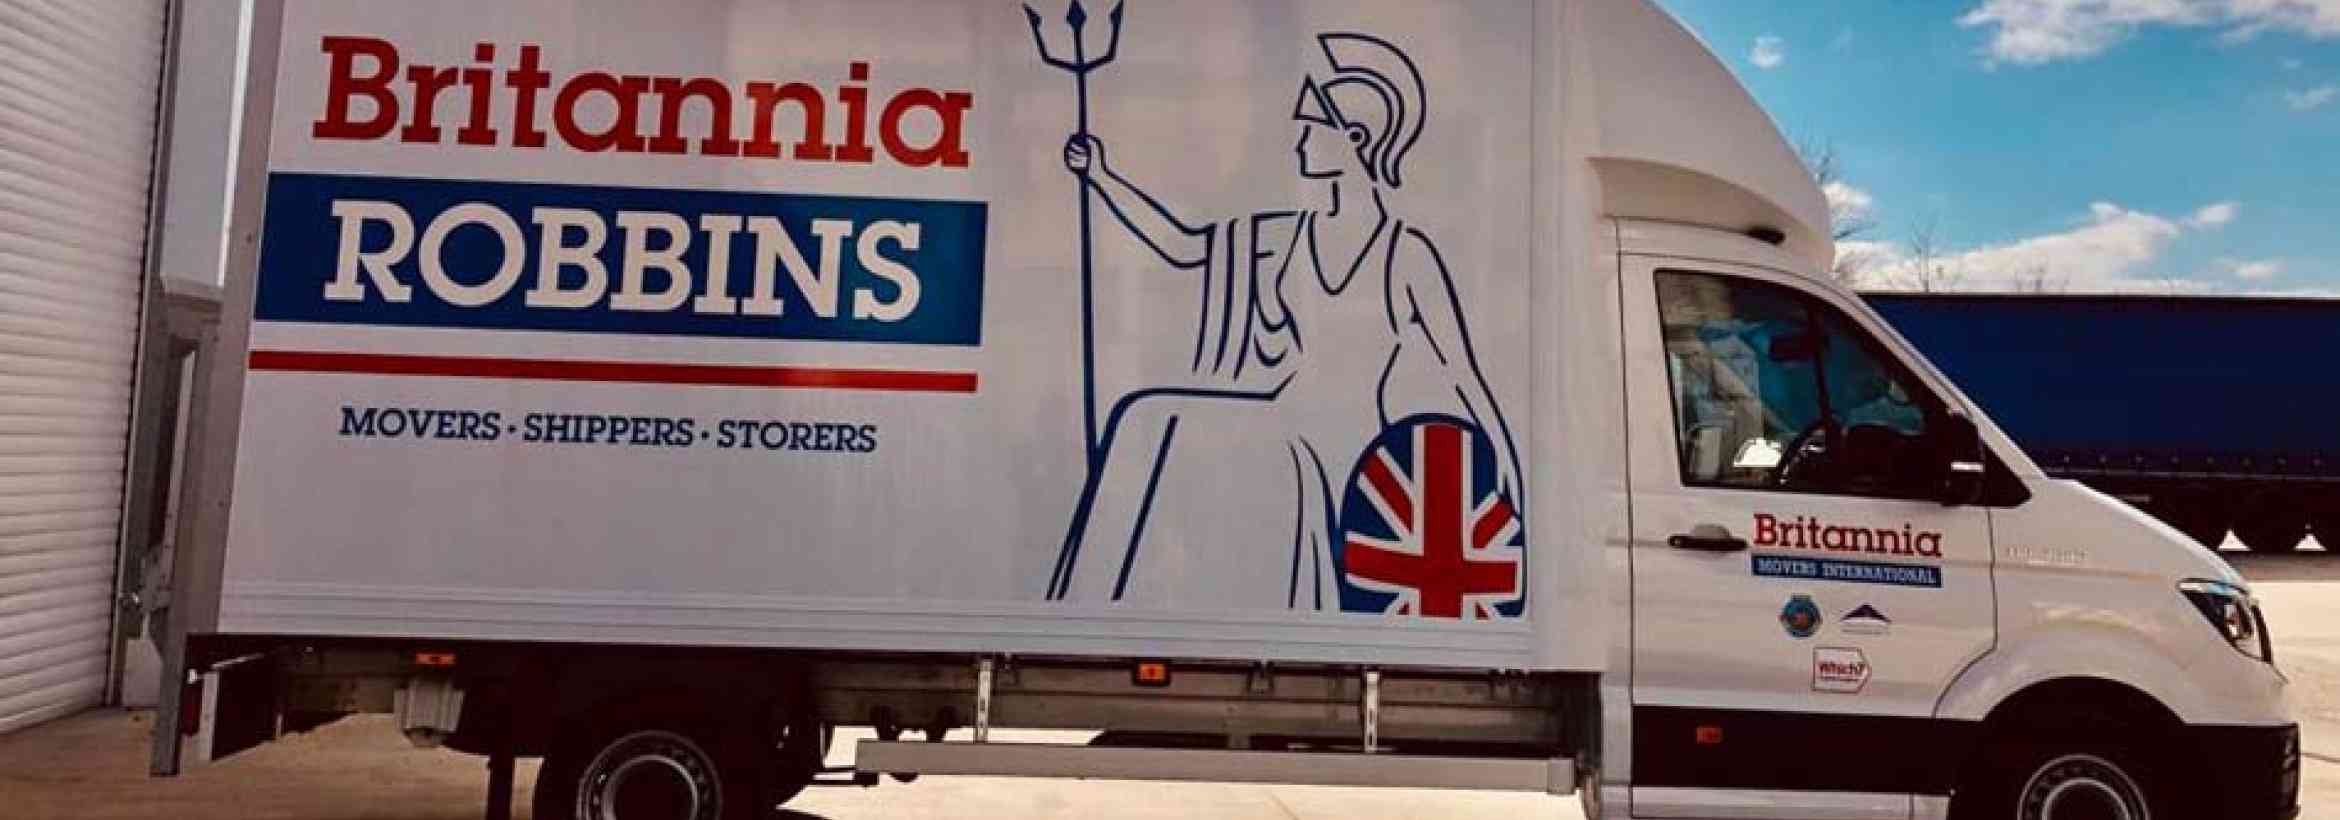 New MAN TGE Luton Van for Britannia Robbins